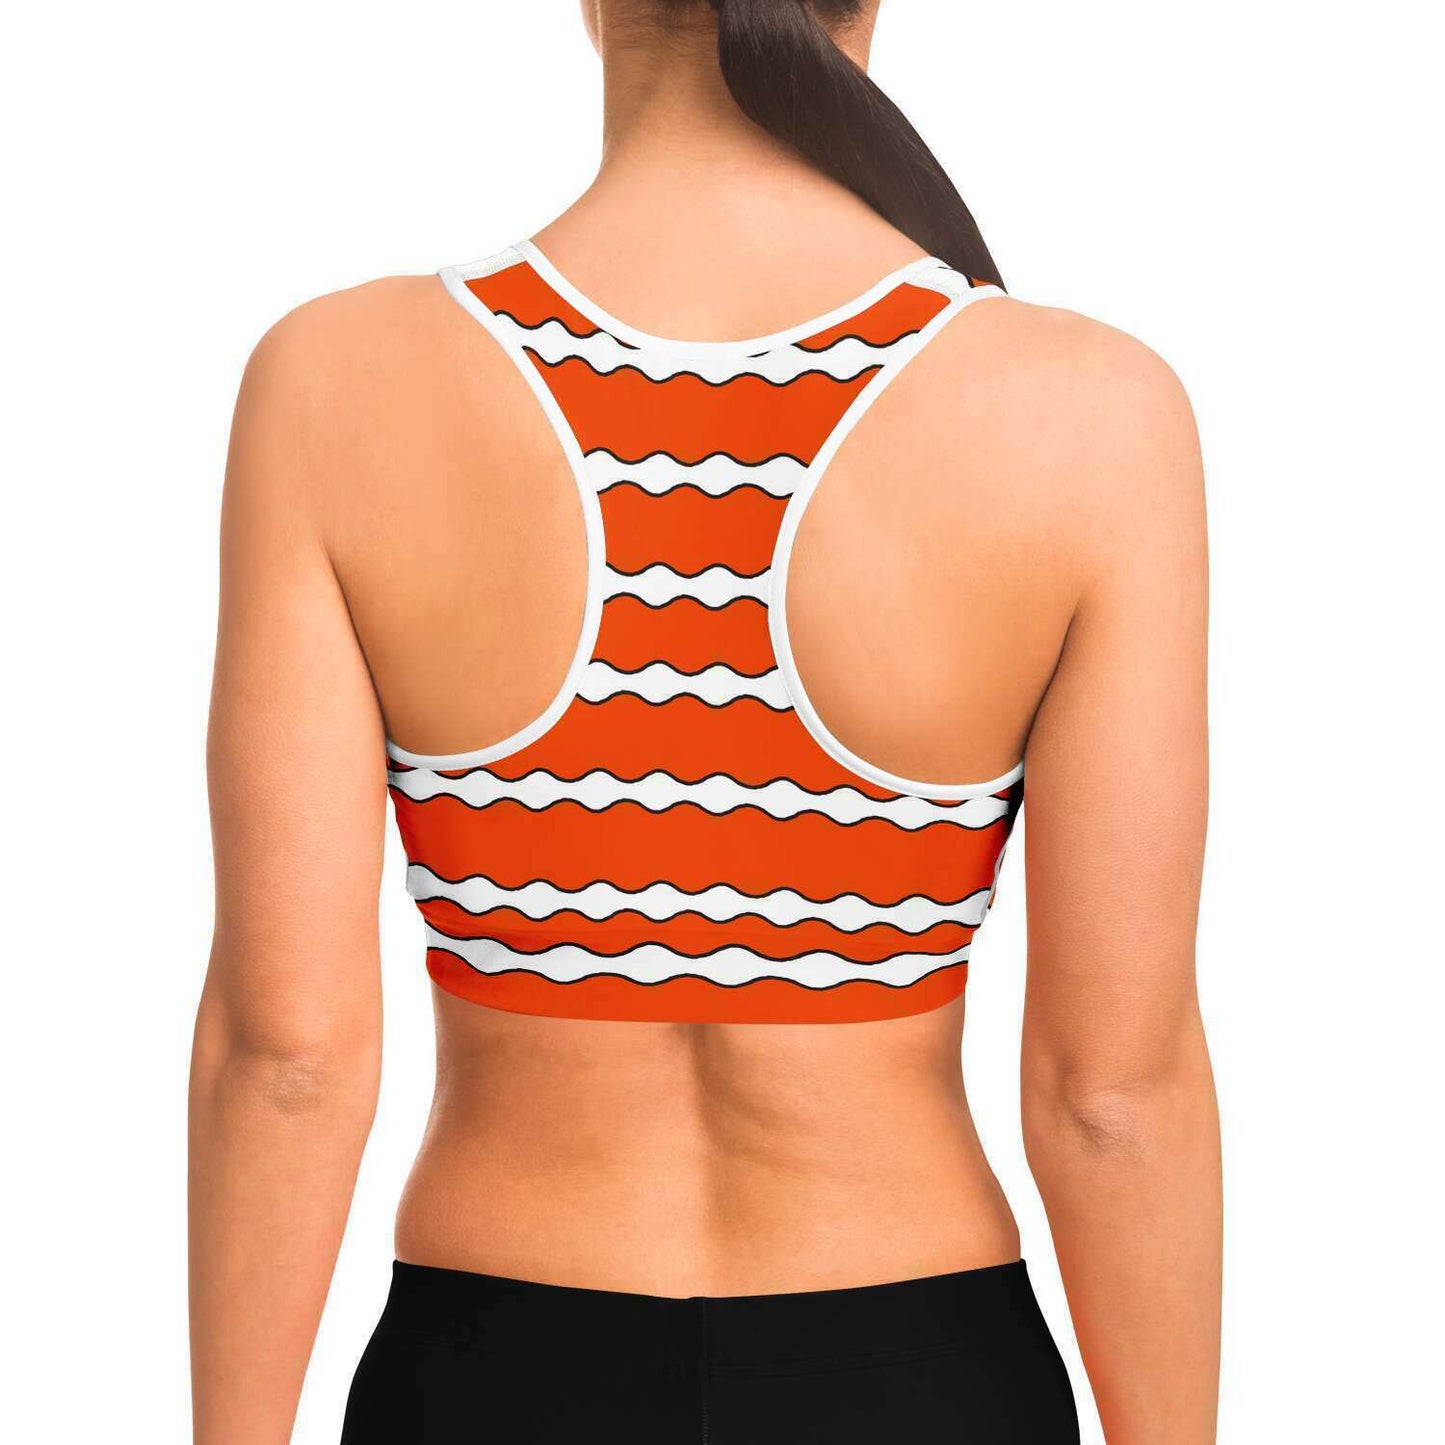 Back view of model wearing clownfish racer-back crop top / sports bra